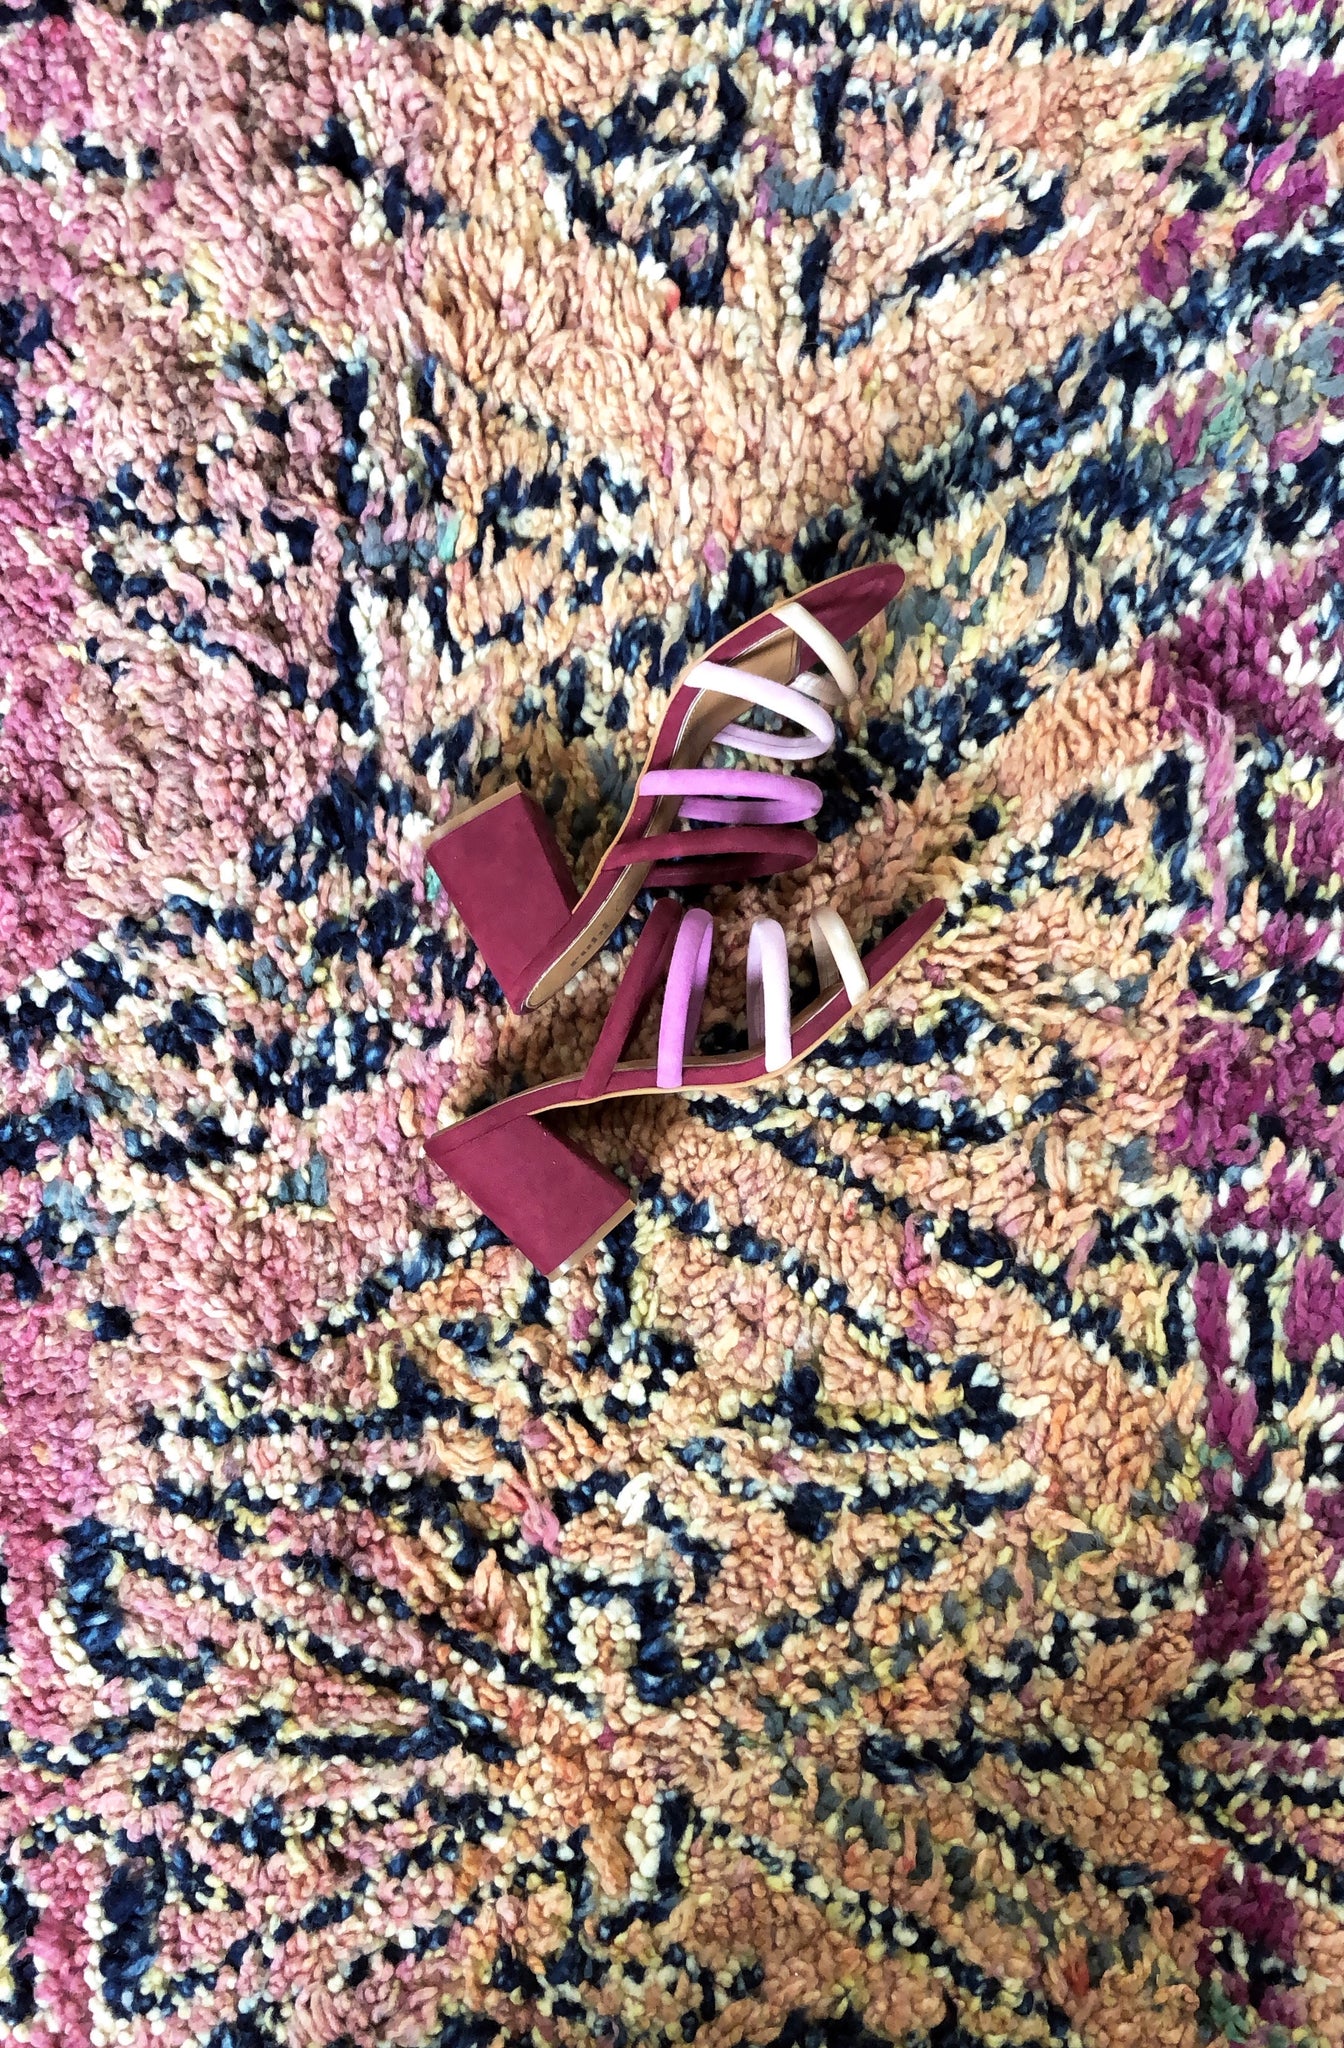 Mila Beni Mguild Vintage Moroccan Rug